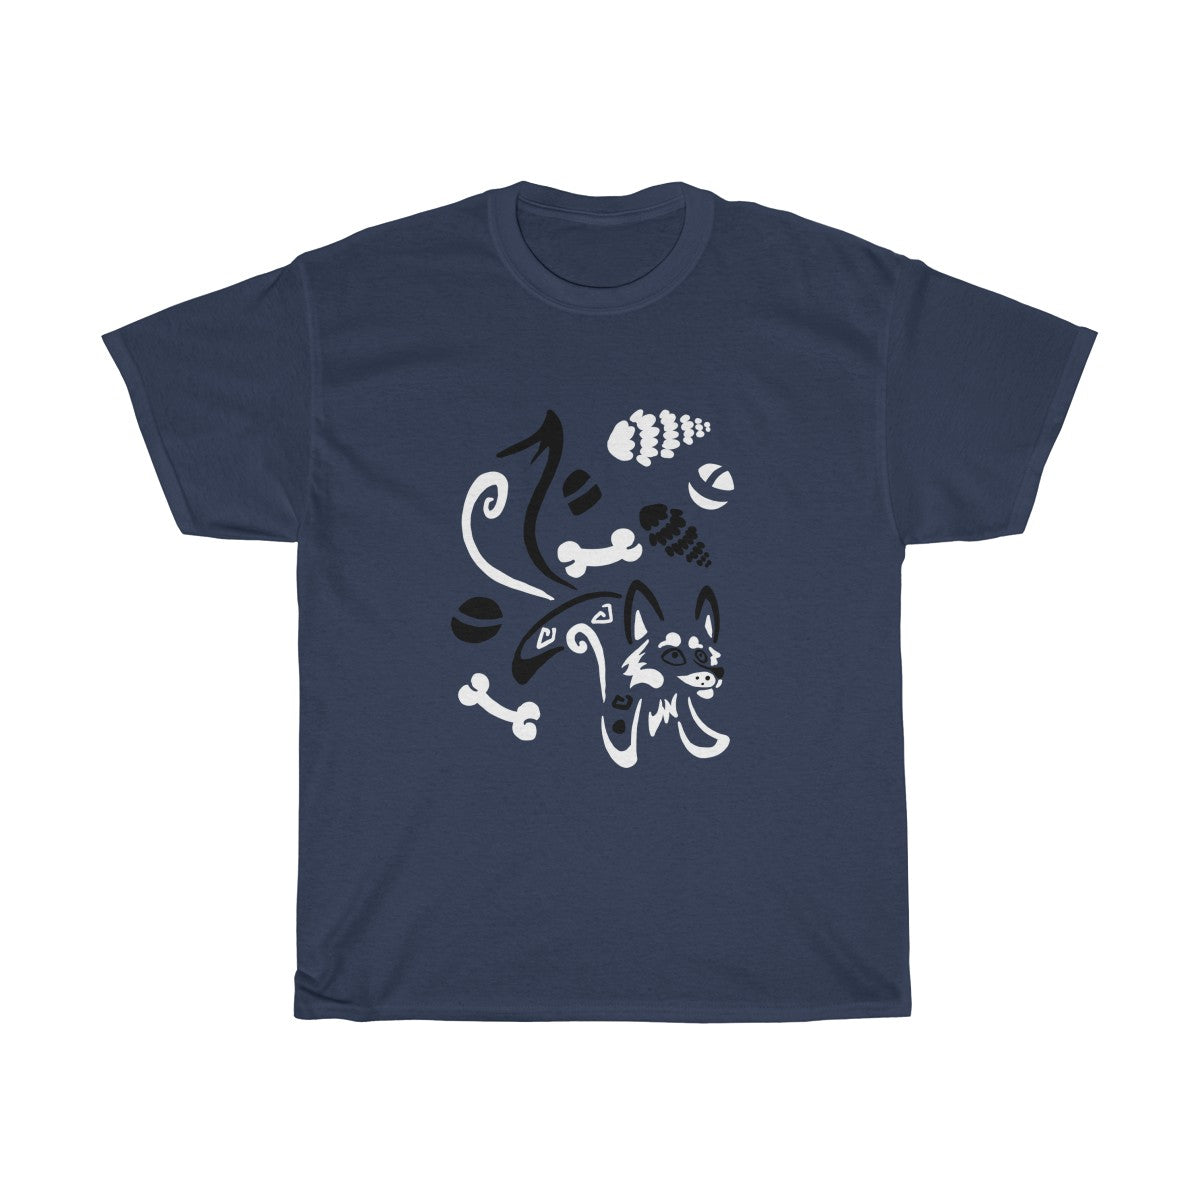 Yotes & Bones - T-Shirt T-Shirt Dire Creatures Navy Blue S 